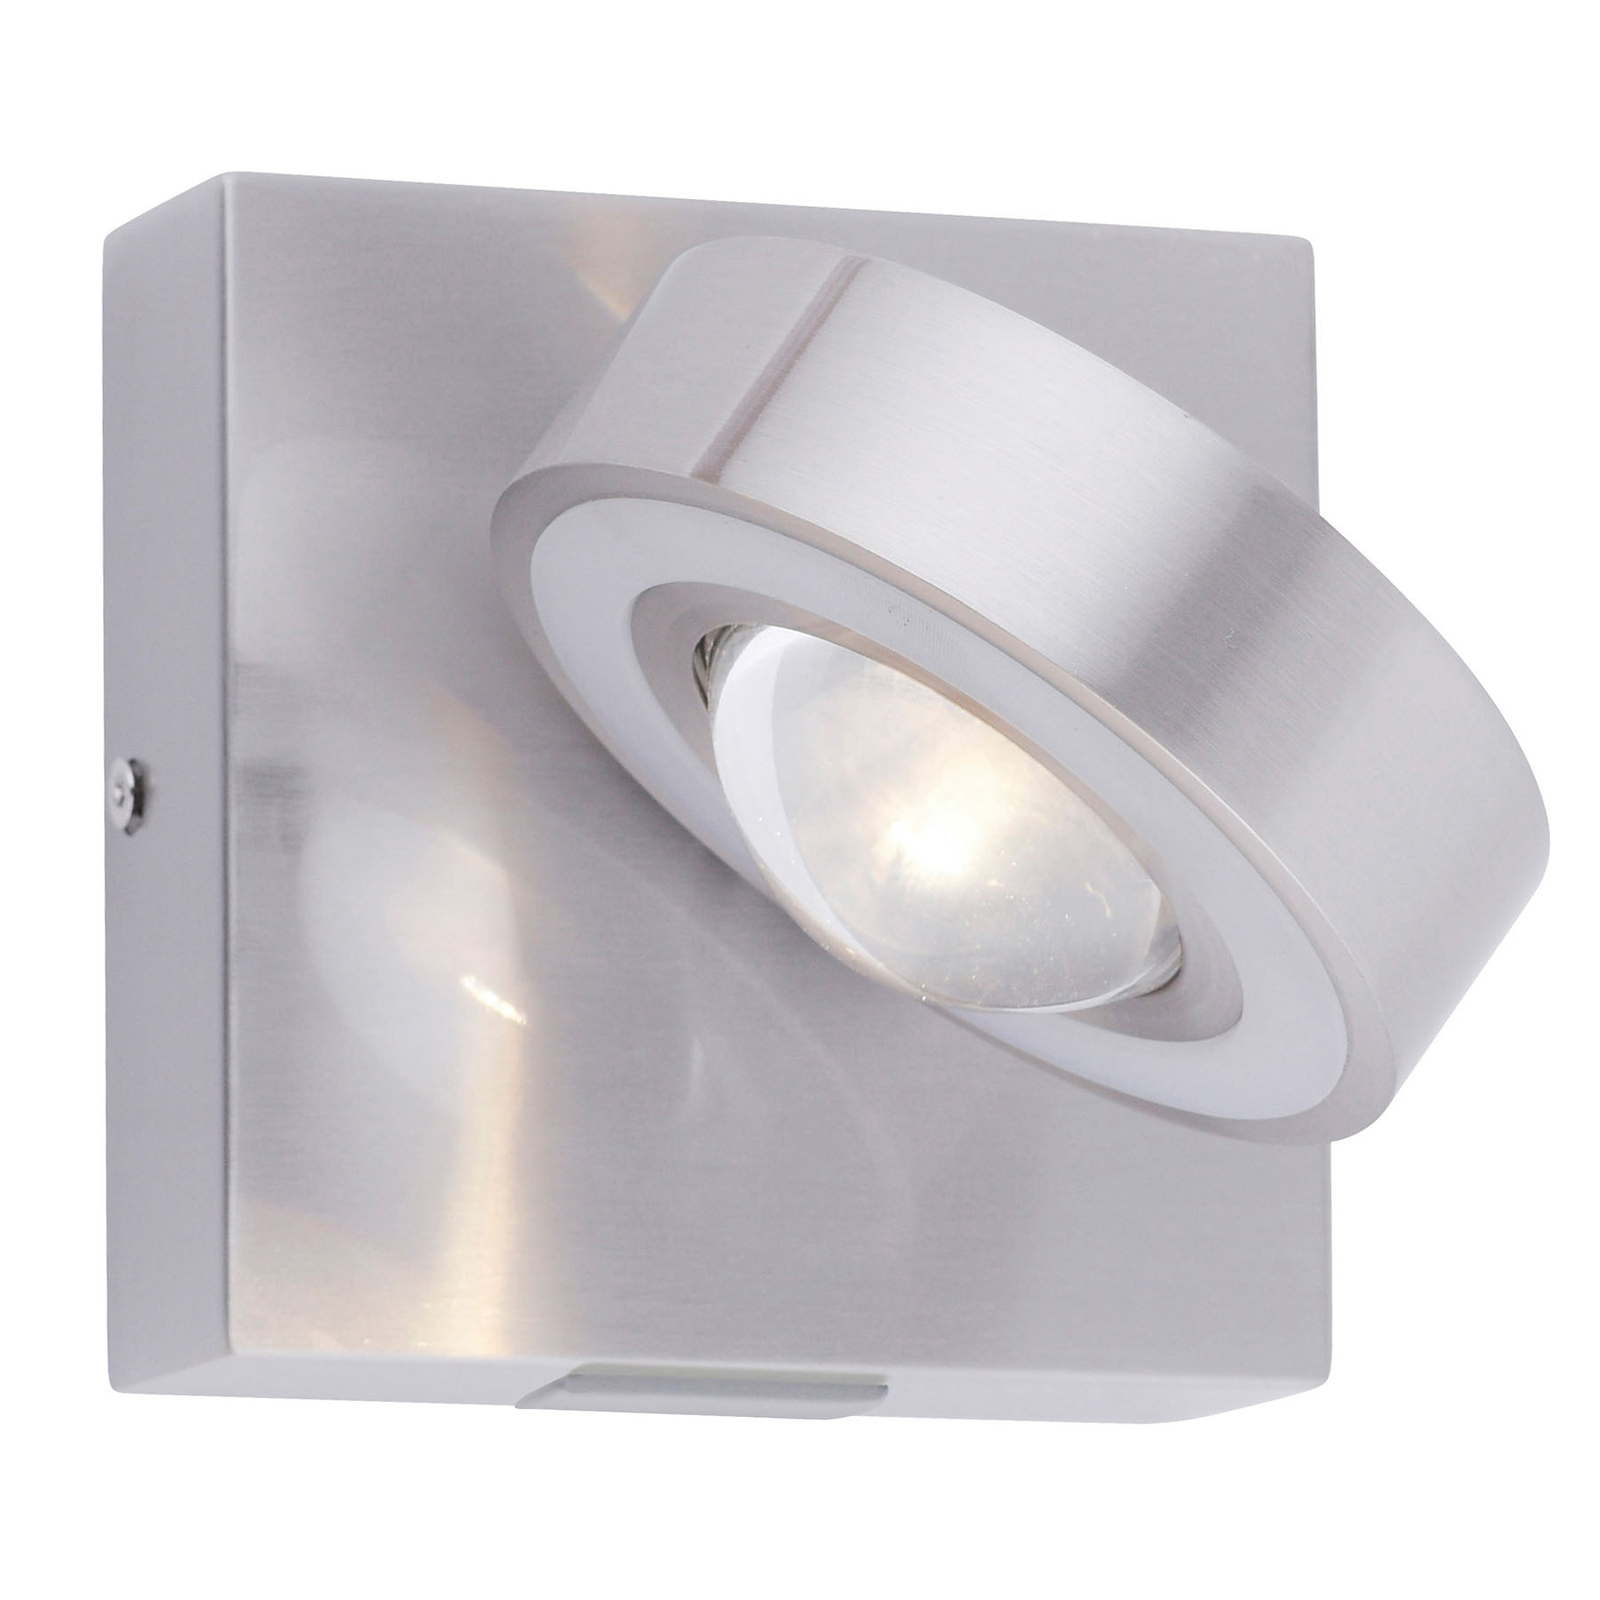 Paul Neuhaus Q-MIA LED nástěnné světlo, ocel